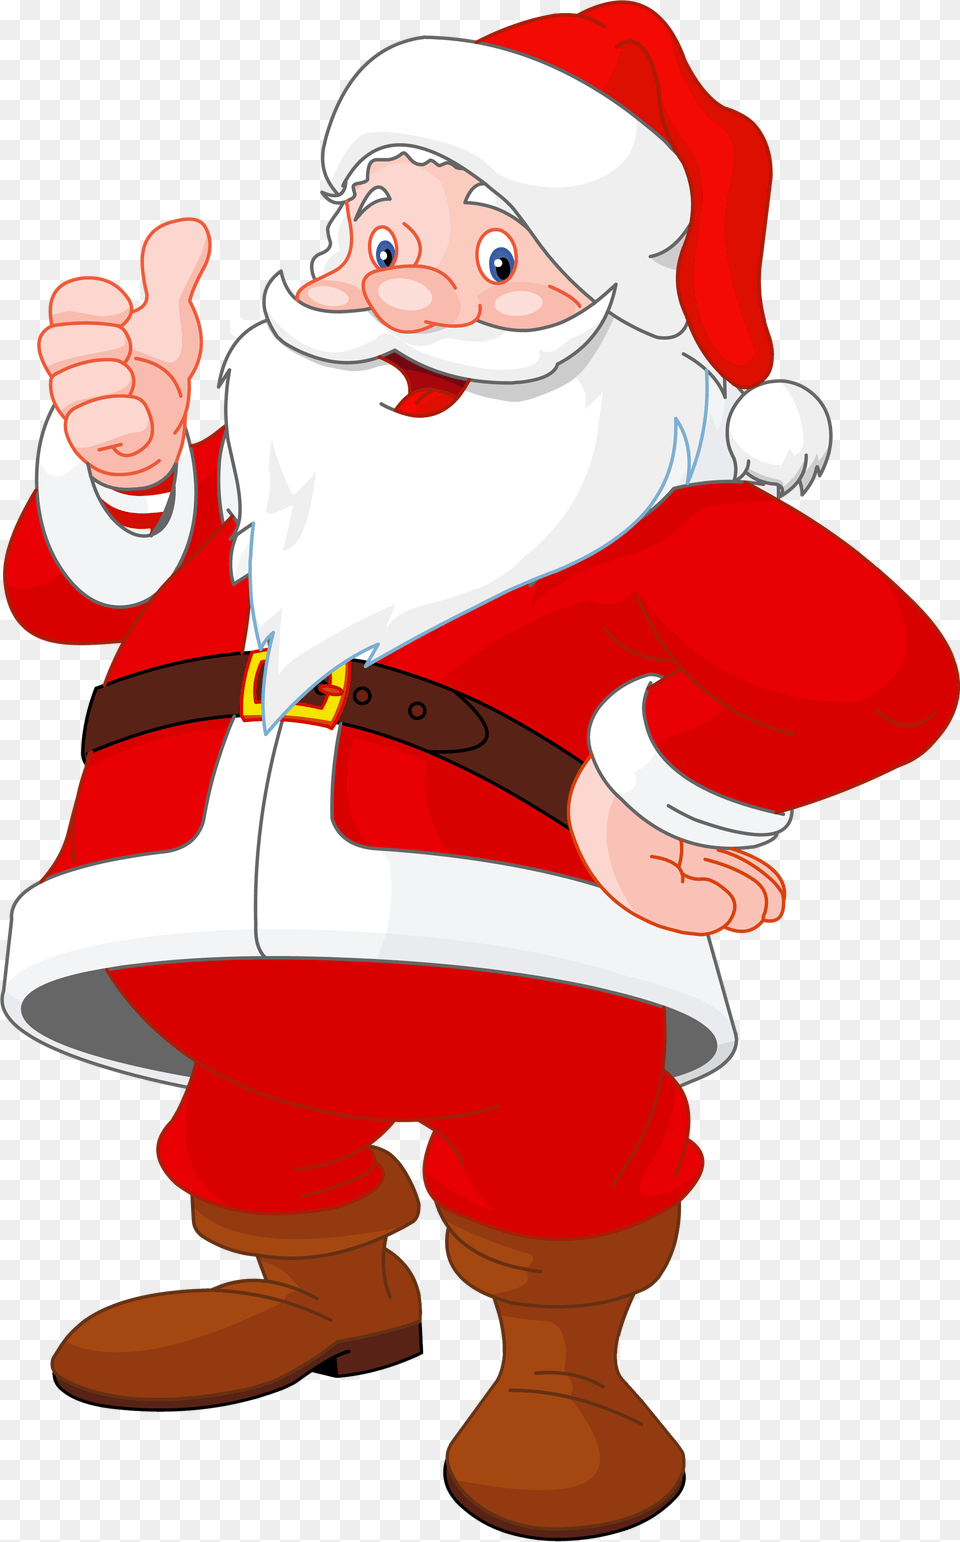 Download Pictures Of Santa Claus Kabaprefinedtravelerco Santa Claus Download, Body Part, Finger, Hand, Person Png Image